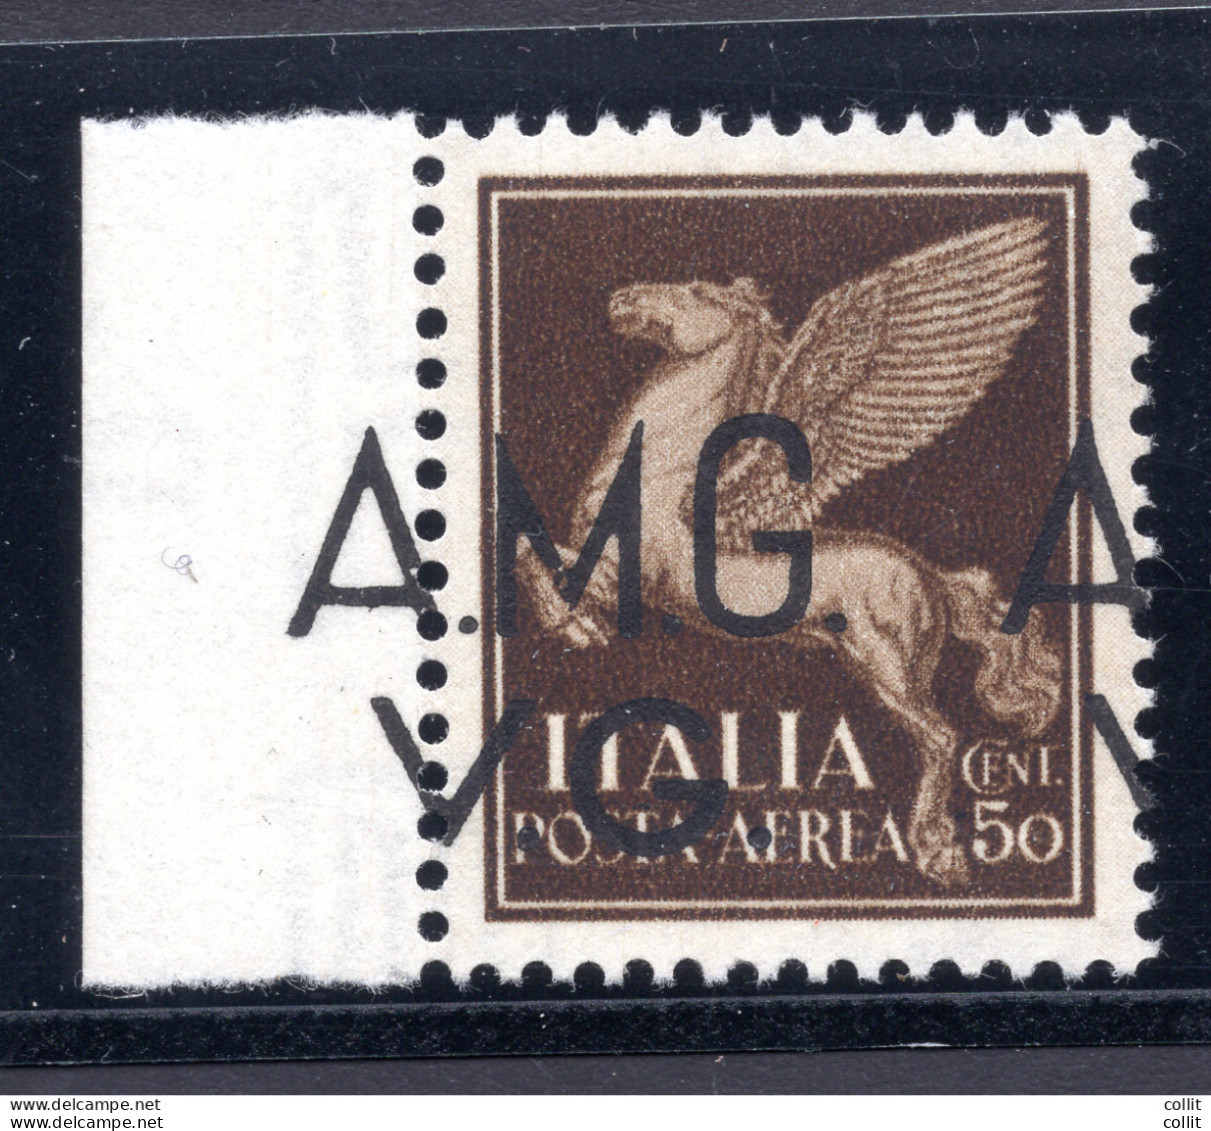 AMG. VG. - Posta Aerea Cent. 50 Soprastampa Spostata "M.G. A." - Mint/hinged